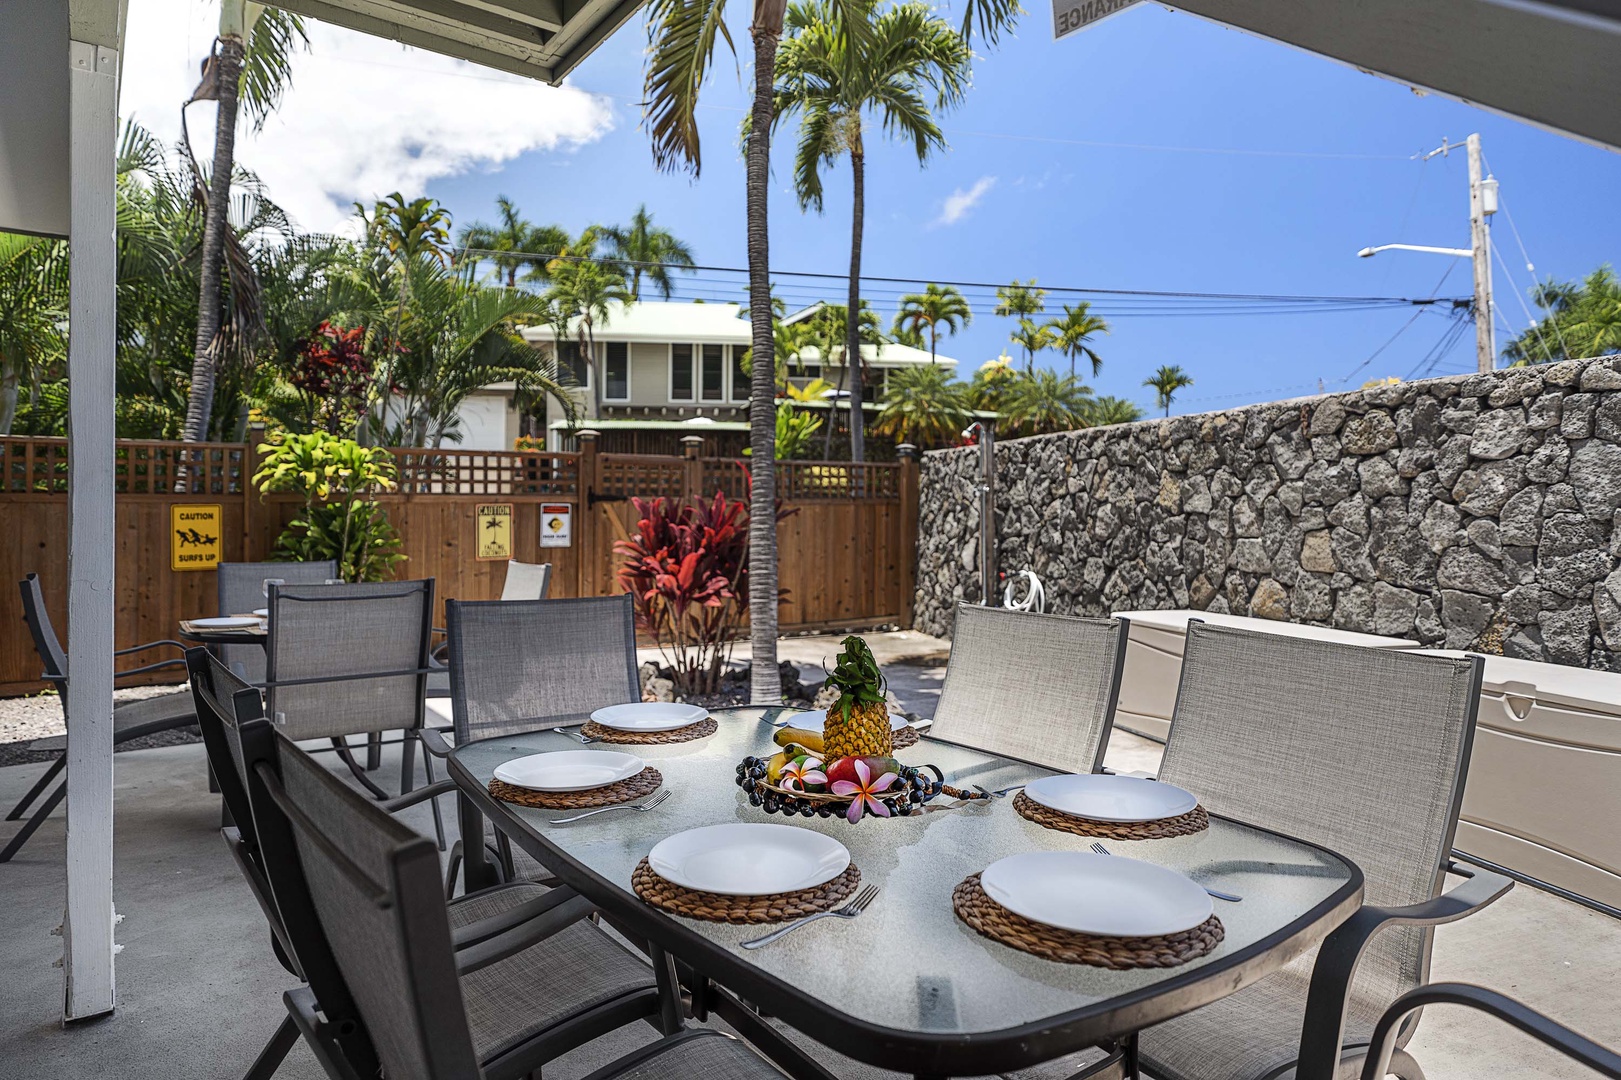 Kailua Kona Vacation Rentals, Hale A Kai - Outdoor dining for 6